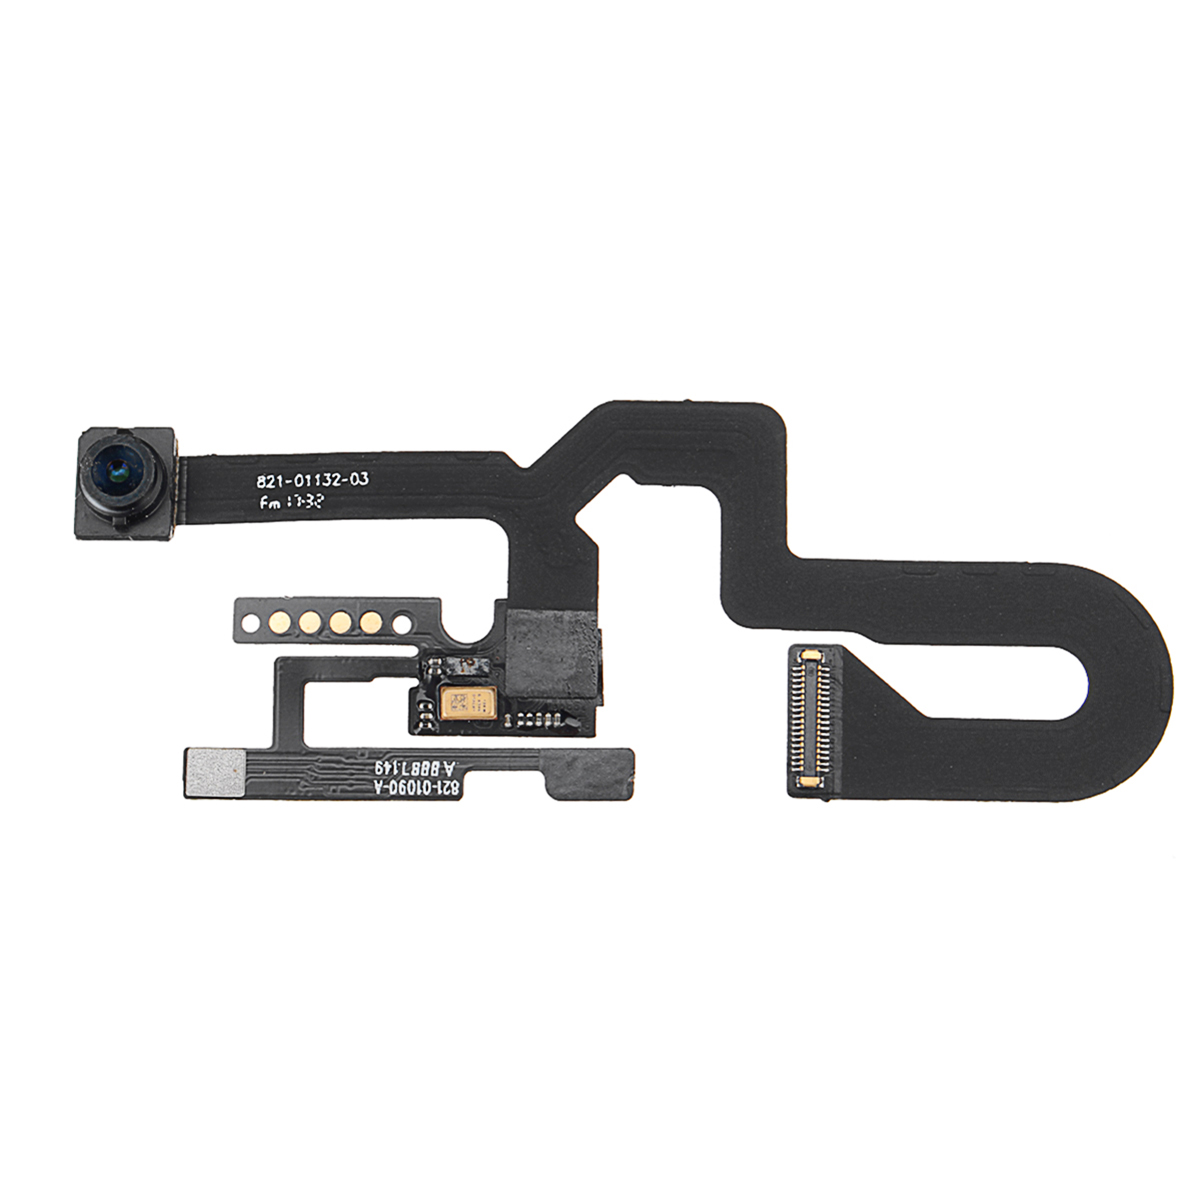 Front-Camera-Sensor-Flex-Cable-For-iPhone-8-Plus-1291761